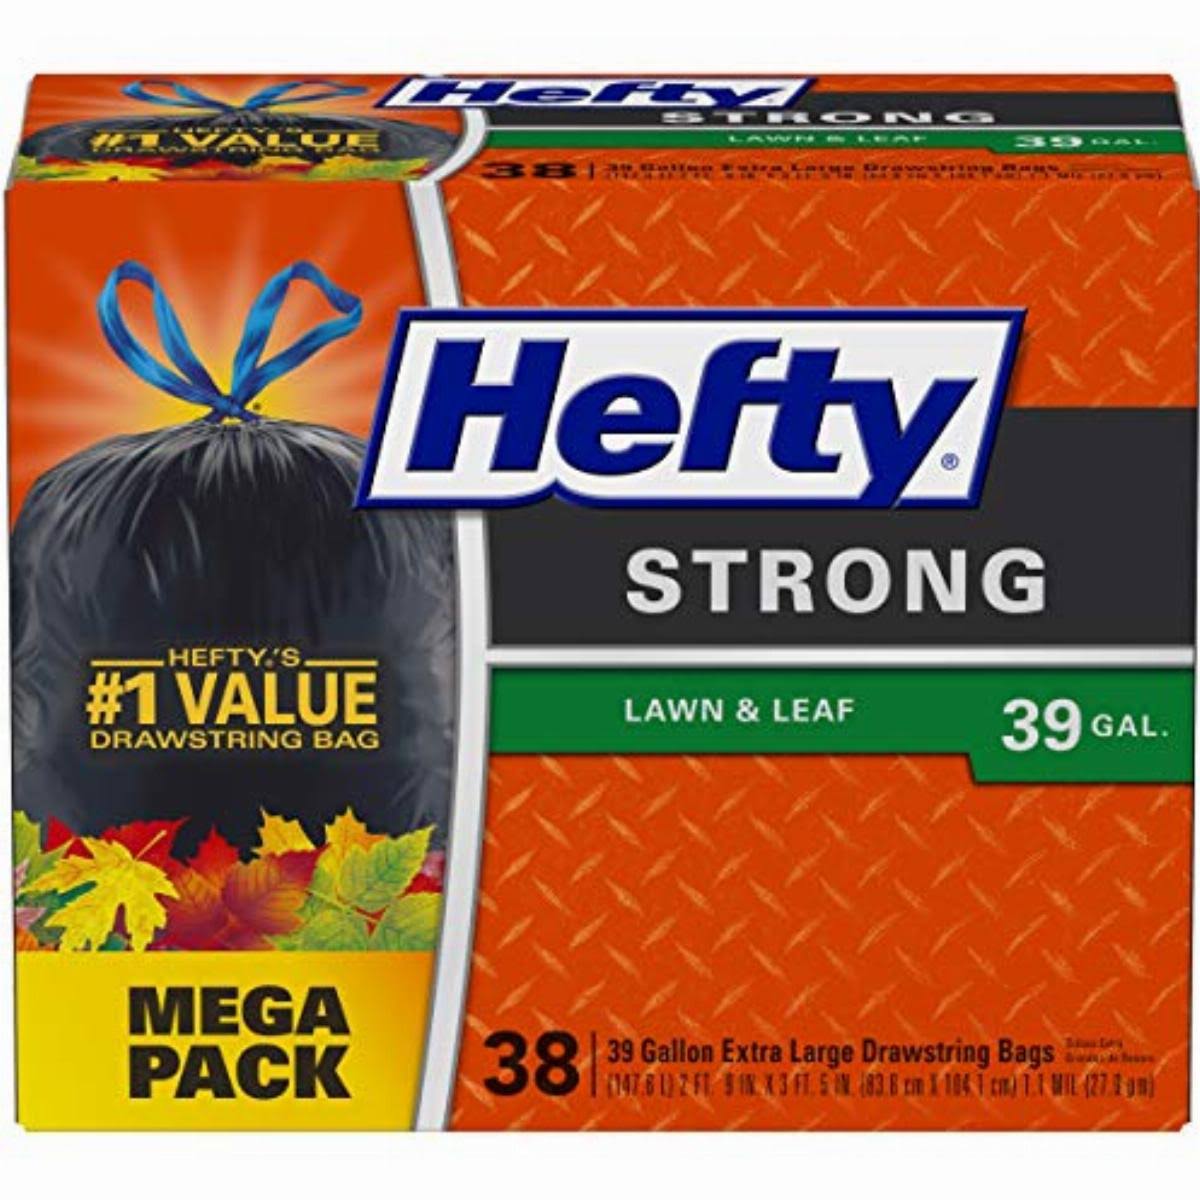 Hefty Extra Strong Drawstring Bags Mega Pack - Lawn & Leaf, X-Large (39gal), x38